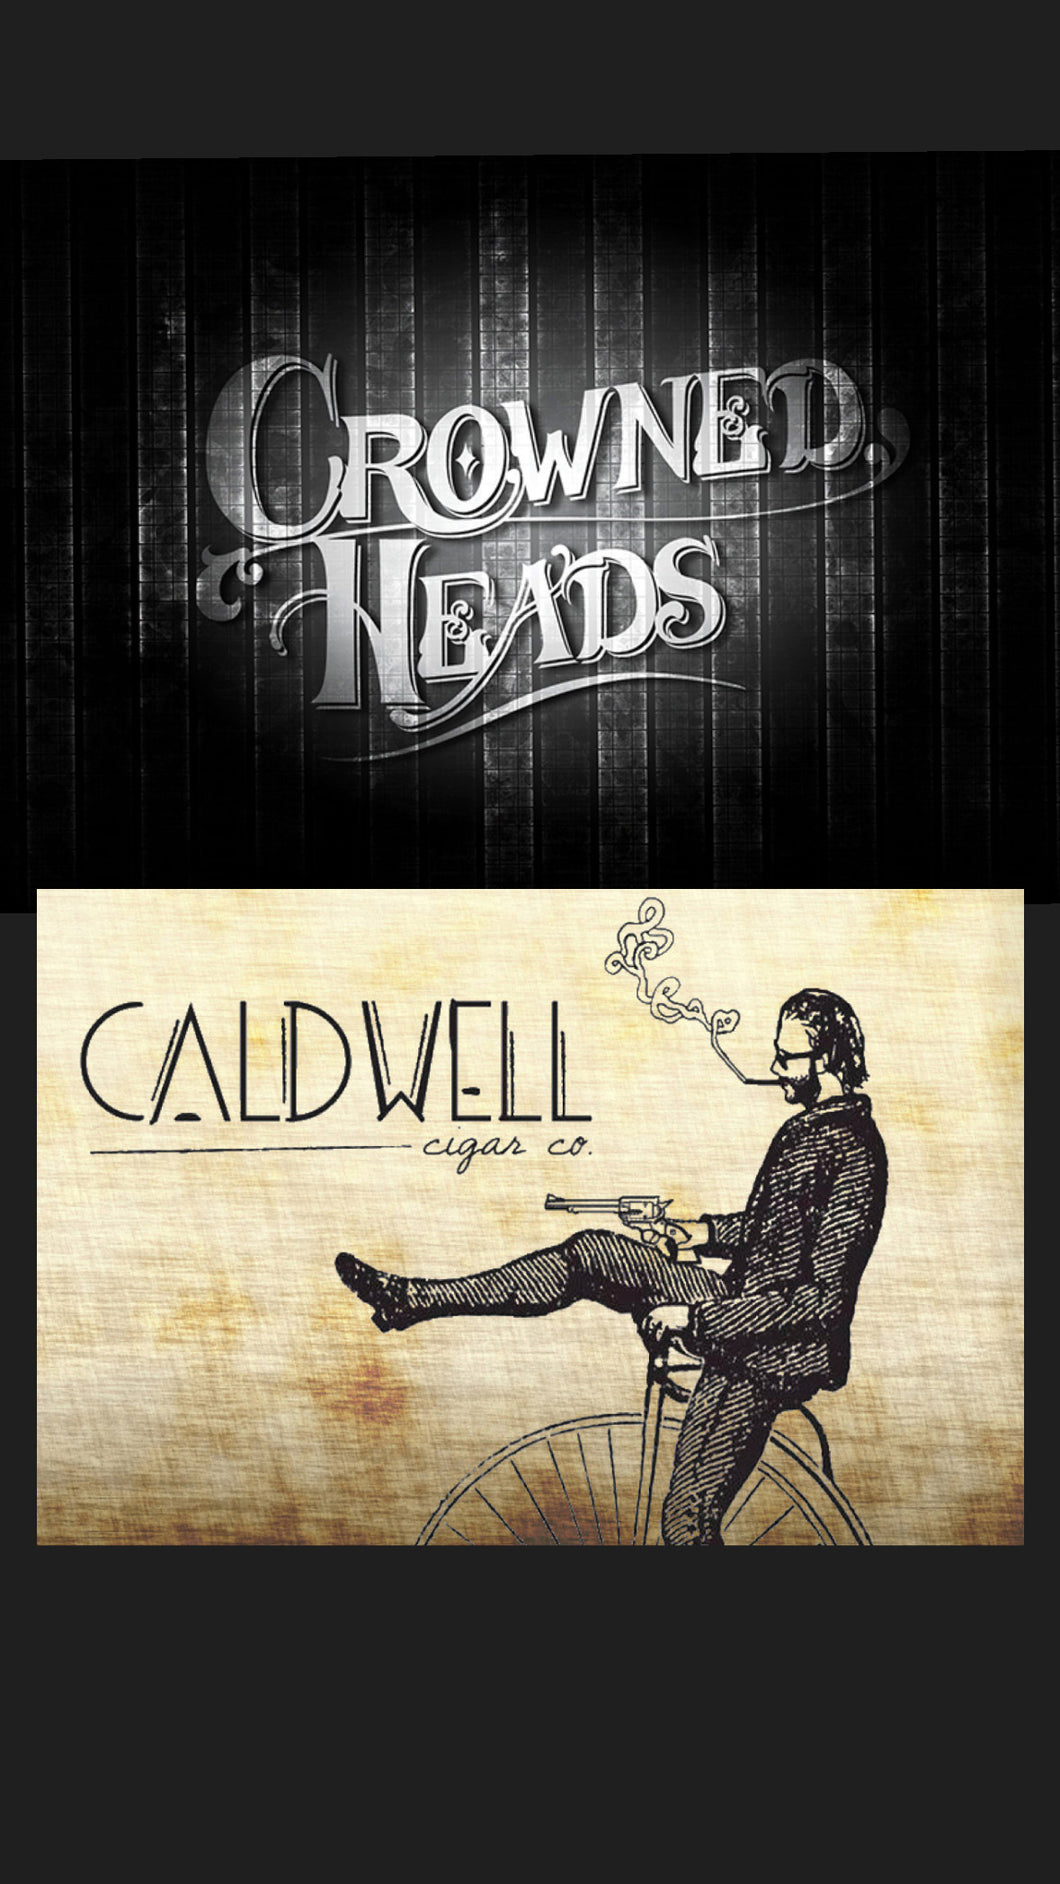 Crowned Heads vs Caldwell